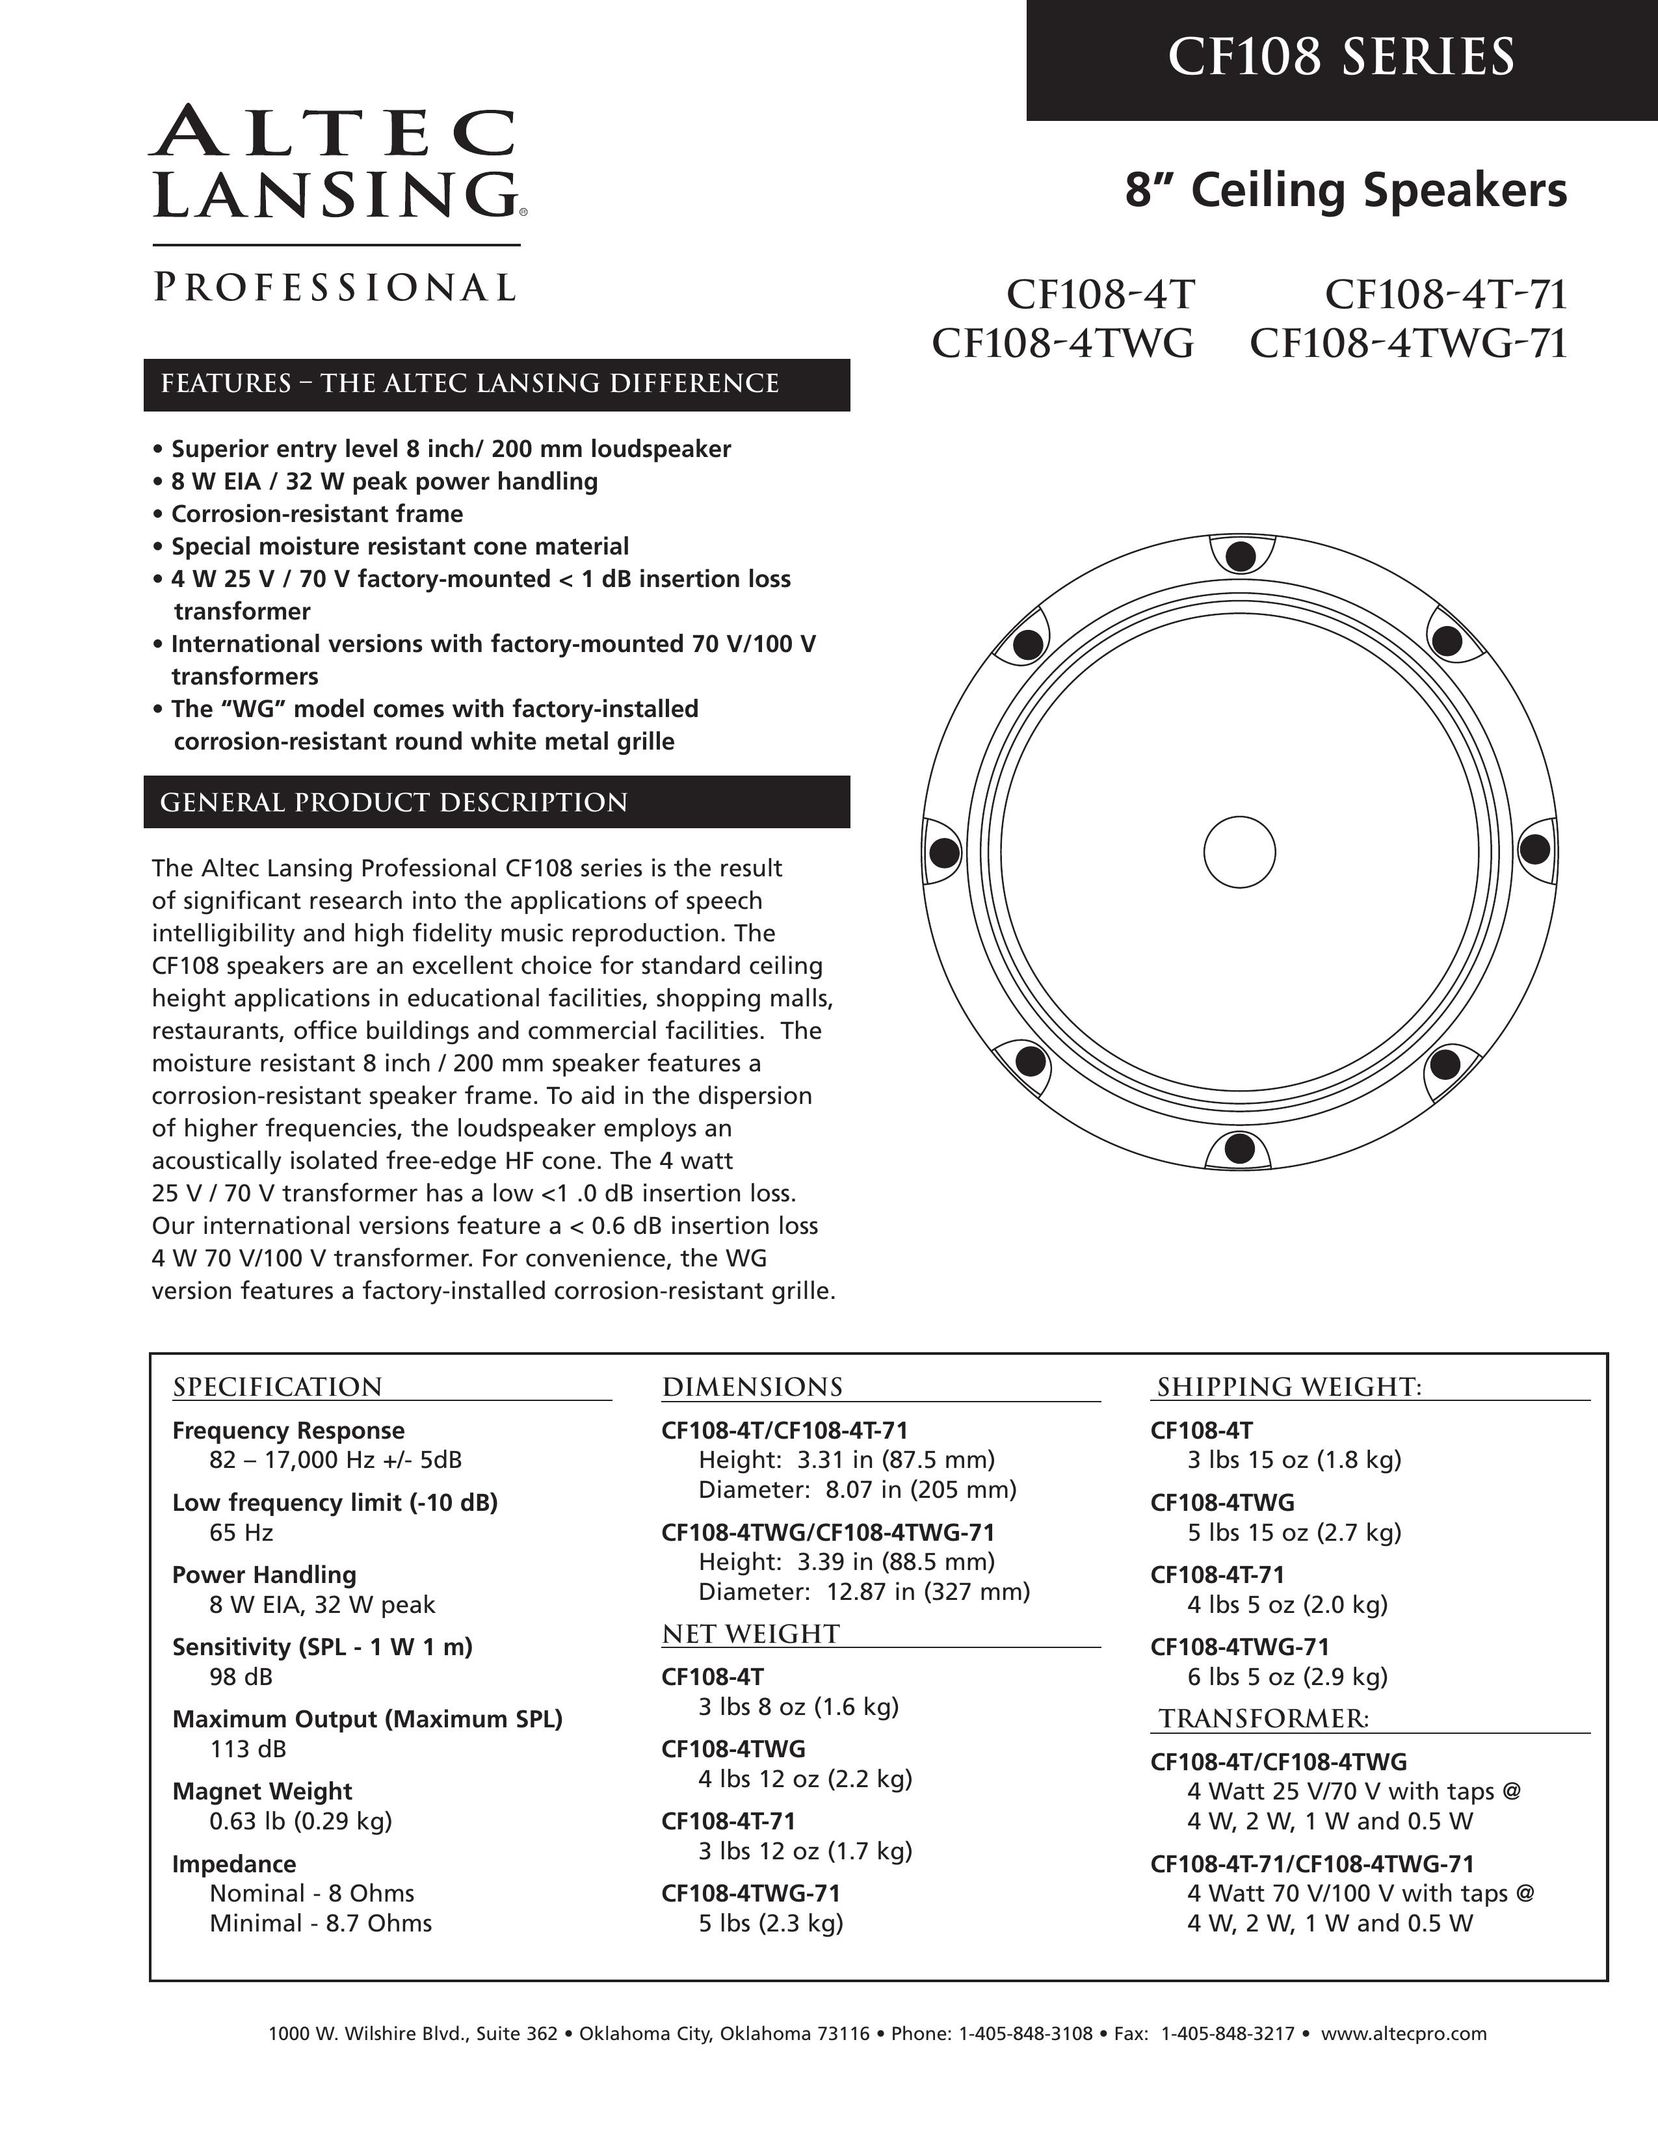 Altec Lansing CF108-4TWG-71 Speaker User Manual